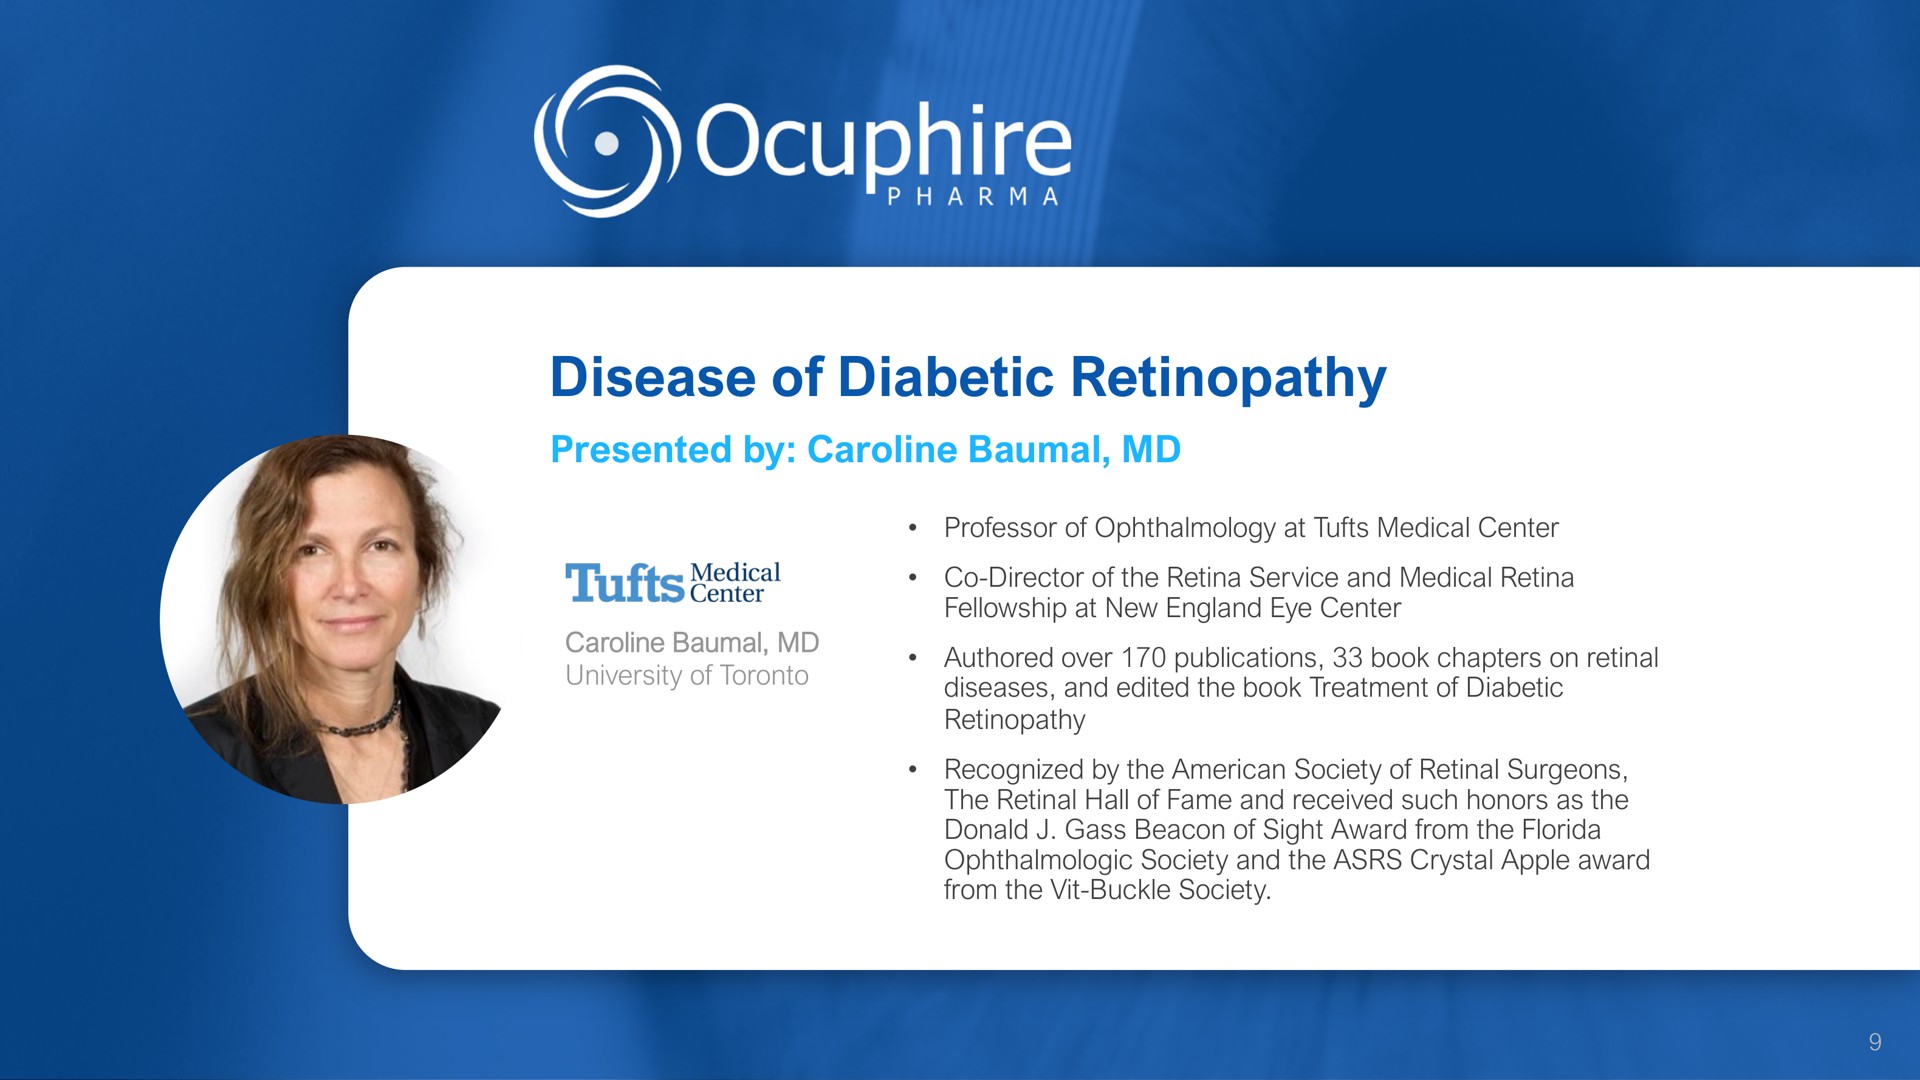 disease of diabetic | Ocuphire Pharma